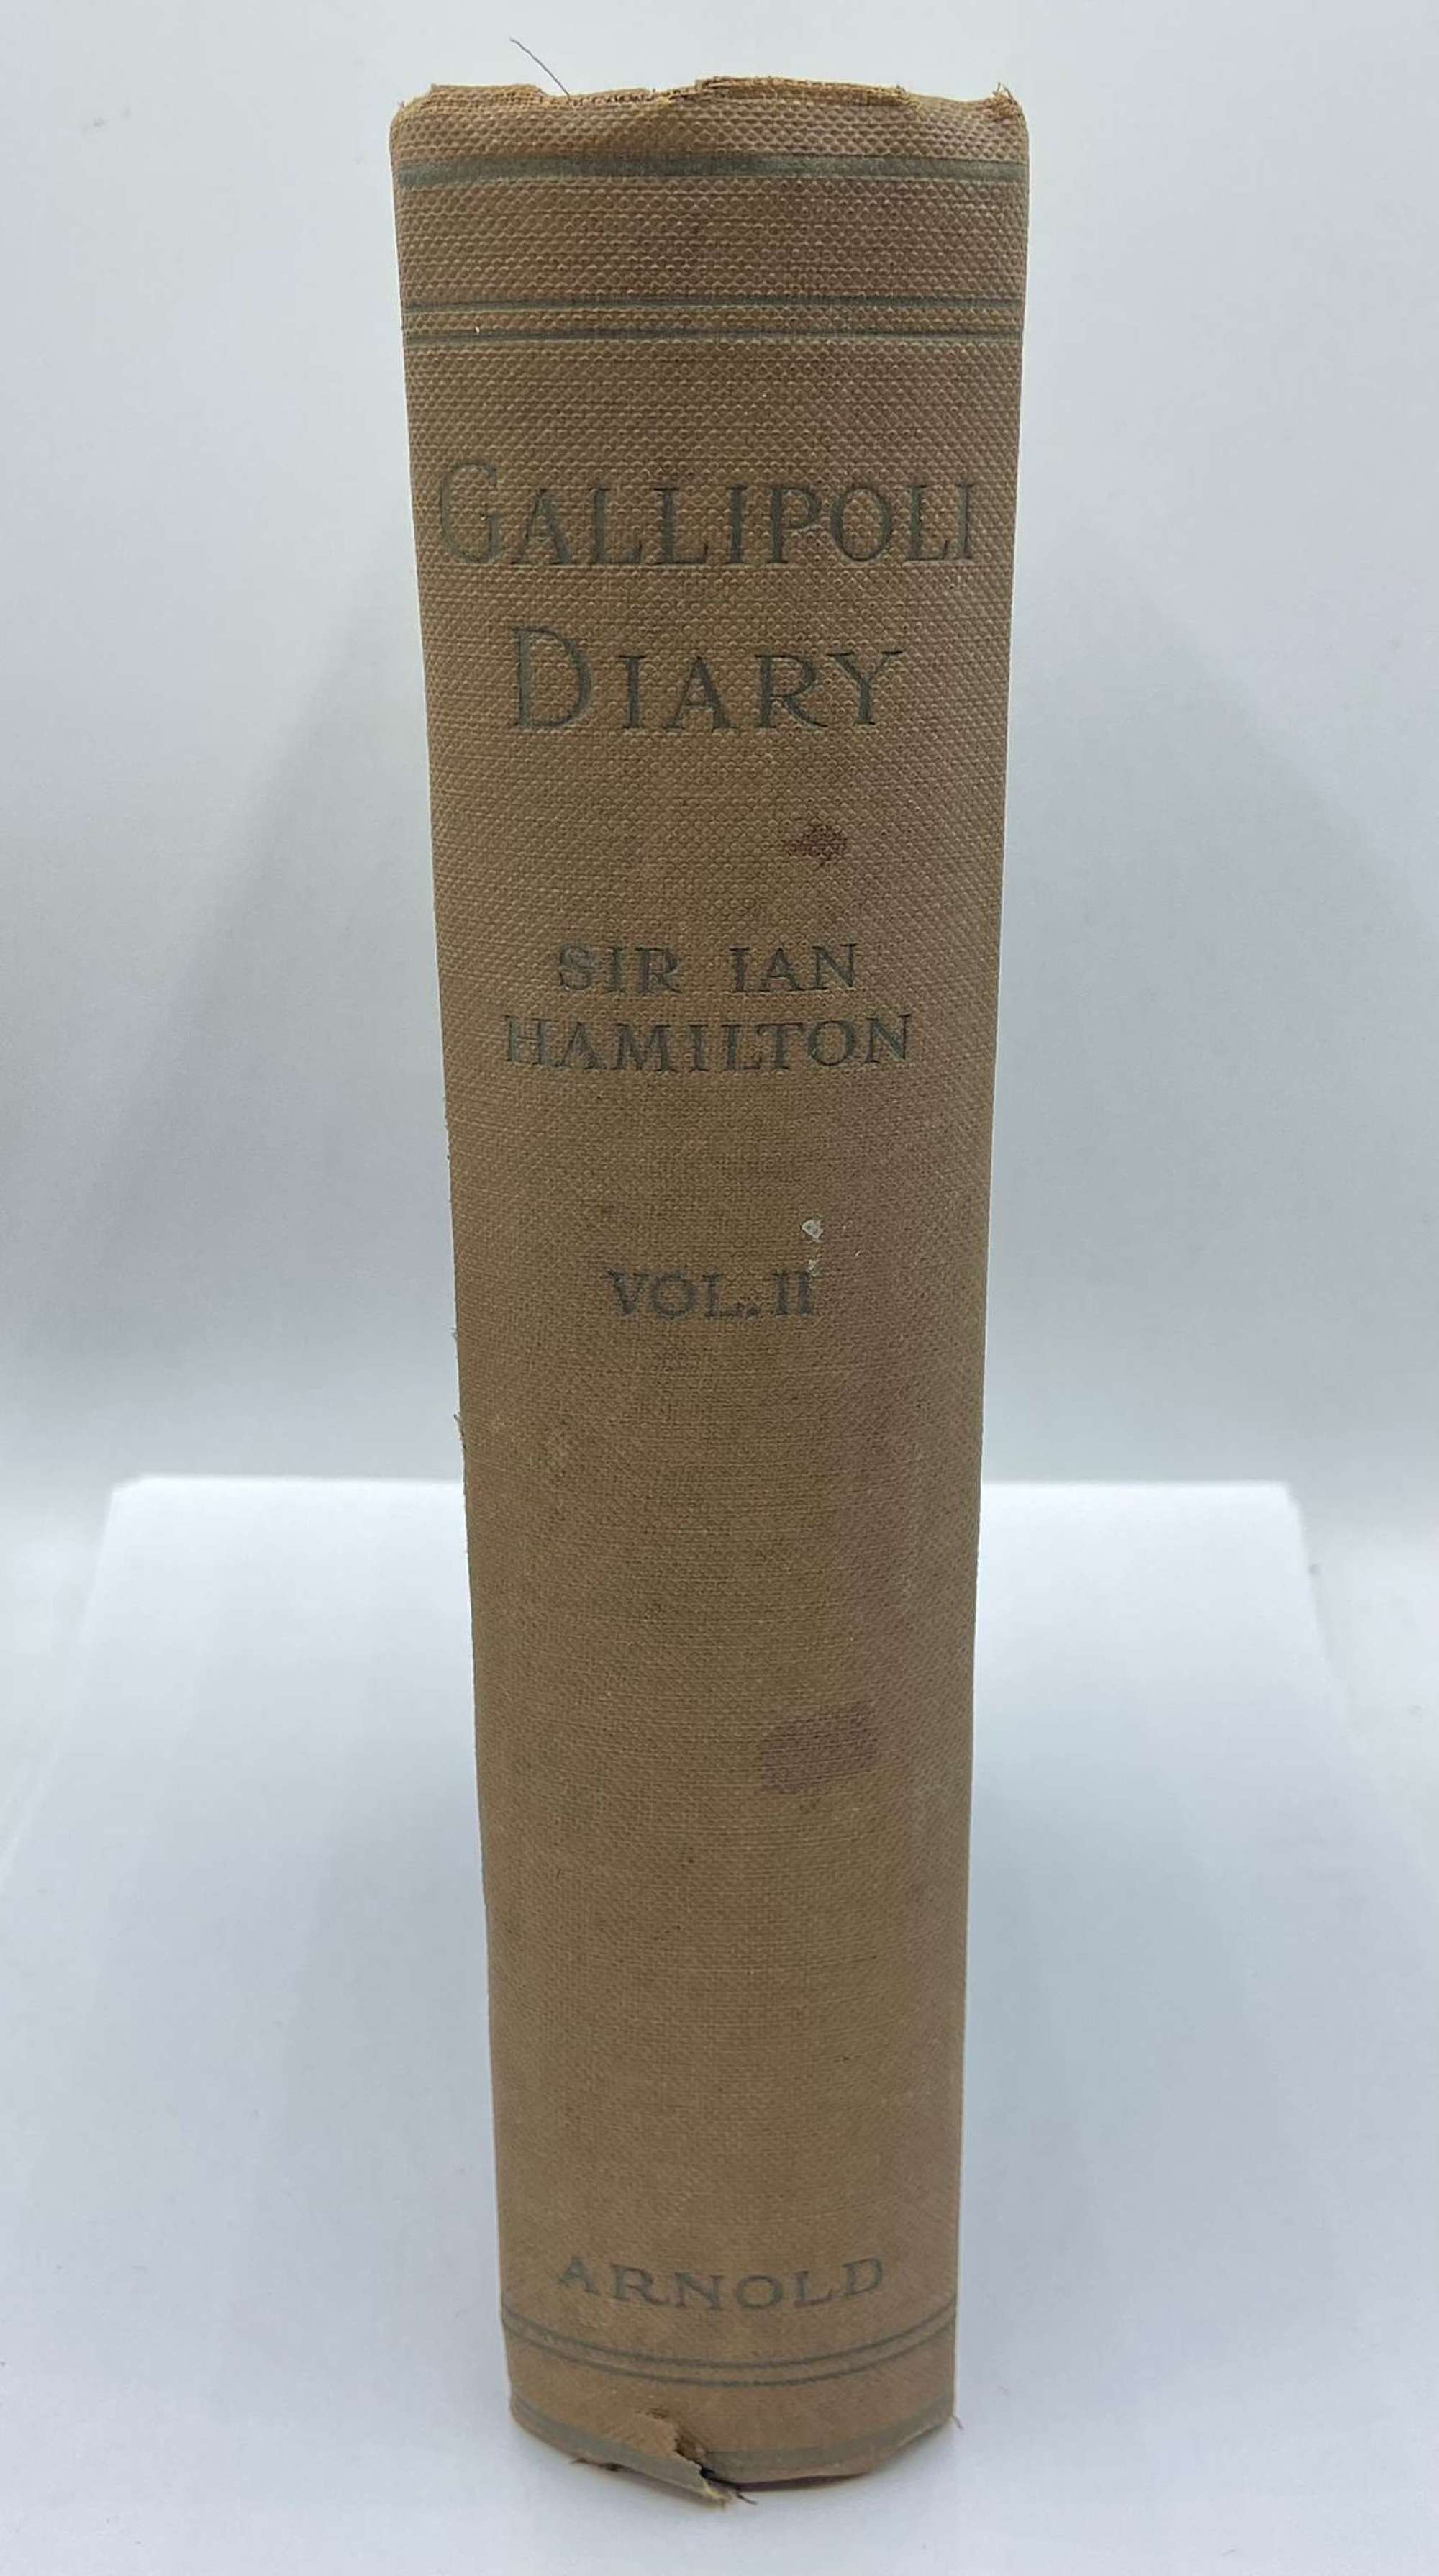 WW1 Gallipoli Diary by General Sir Ian Hamilton Volume II